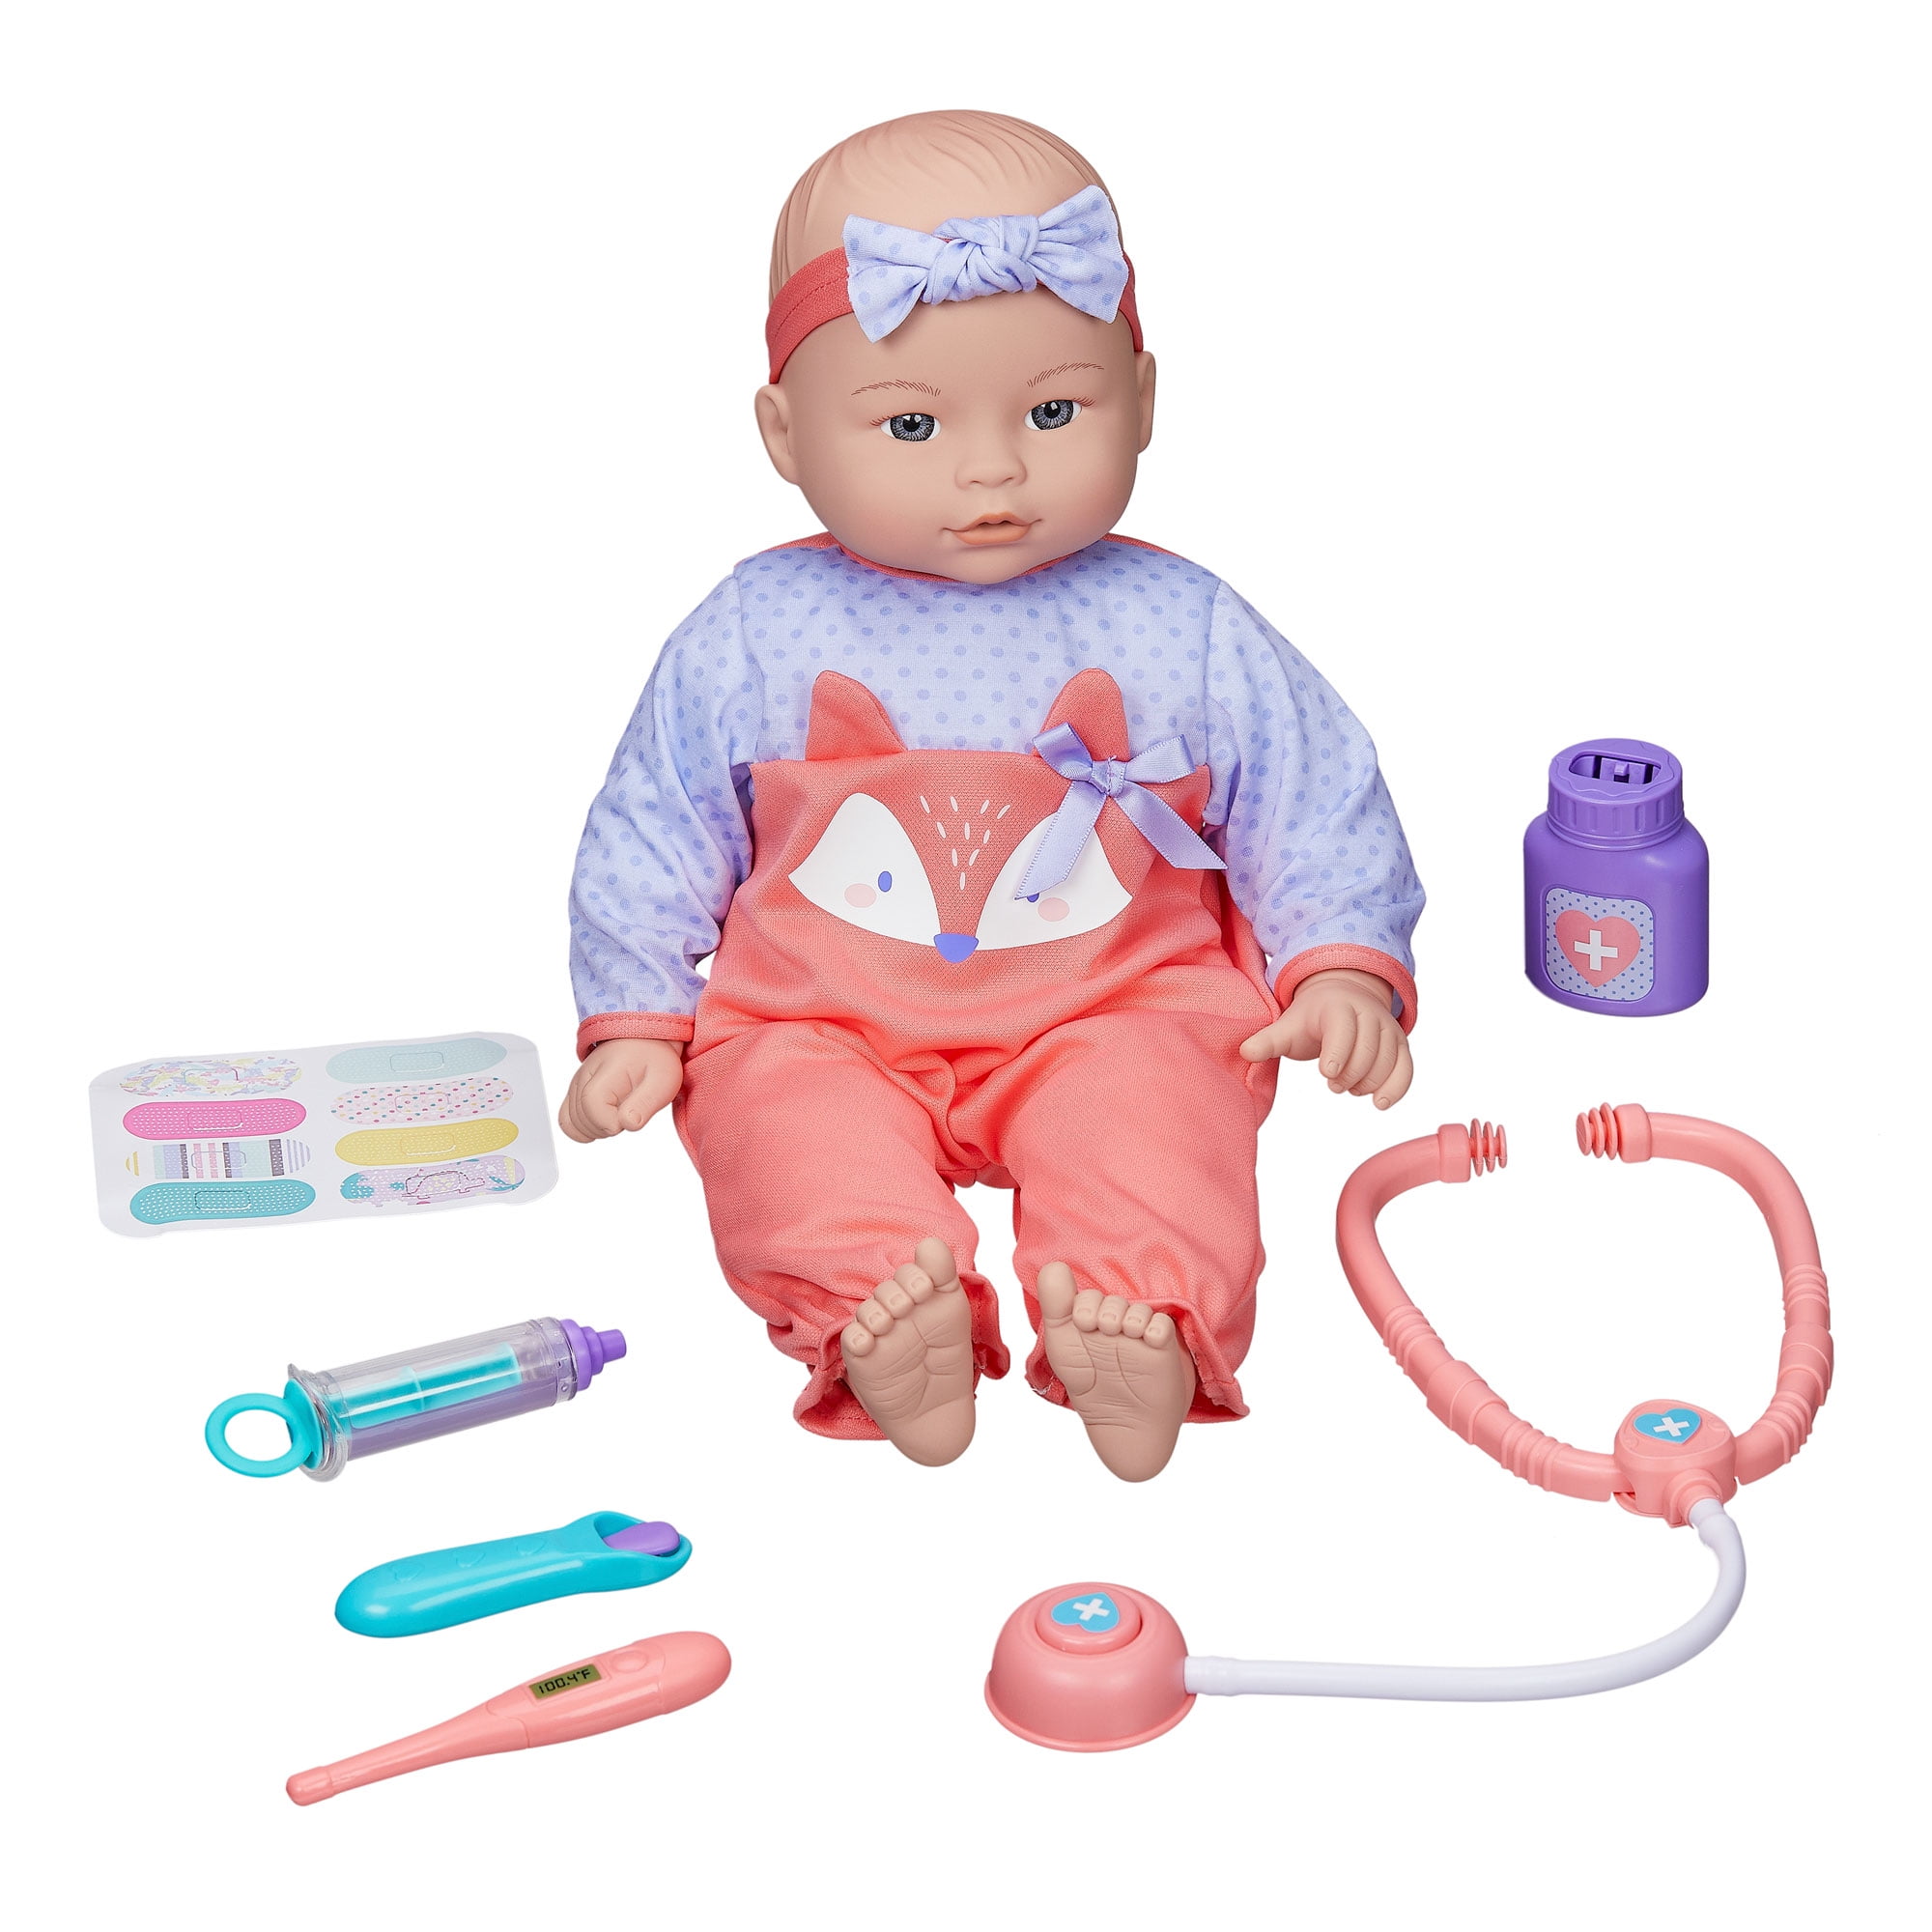 16 Inch New Born Baby Doll Soft Body Doll Girls Play Toy With Dummy w/o Sounds 